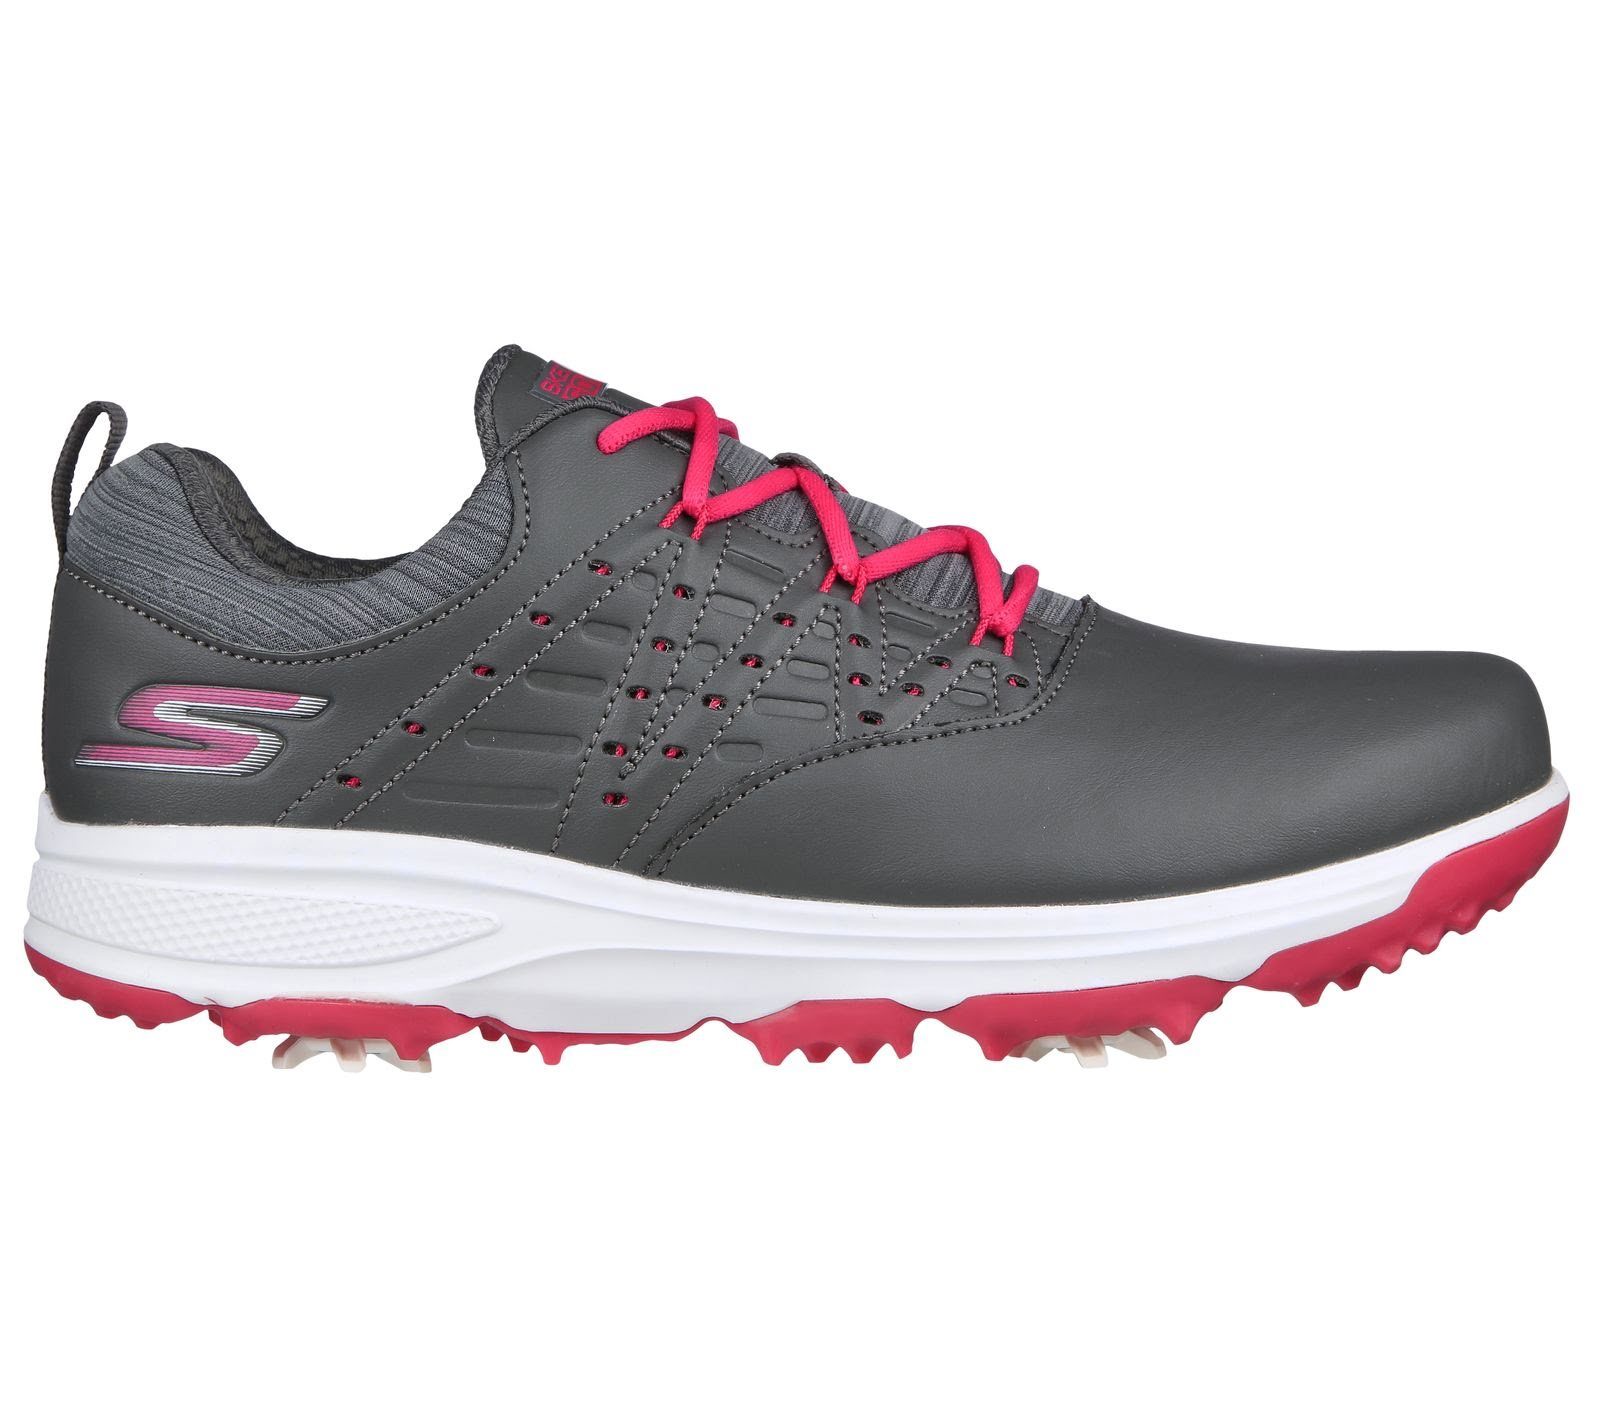 Skechers Skechers Go Golf Pro 2 Damen Golfschuhe Golfschuh Wasserdicht I Mittelfuß-Supporttechnologie Grau/Pink